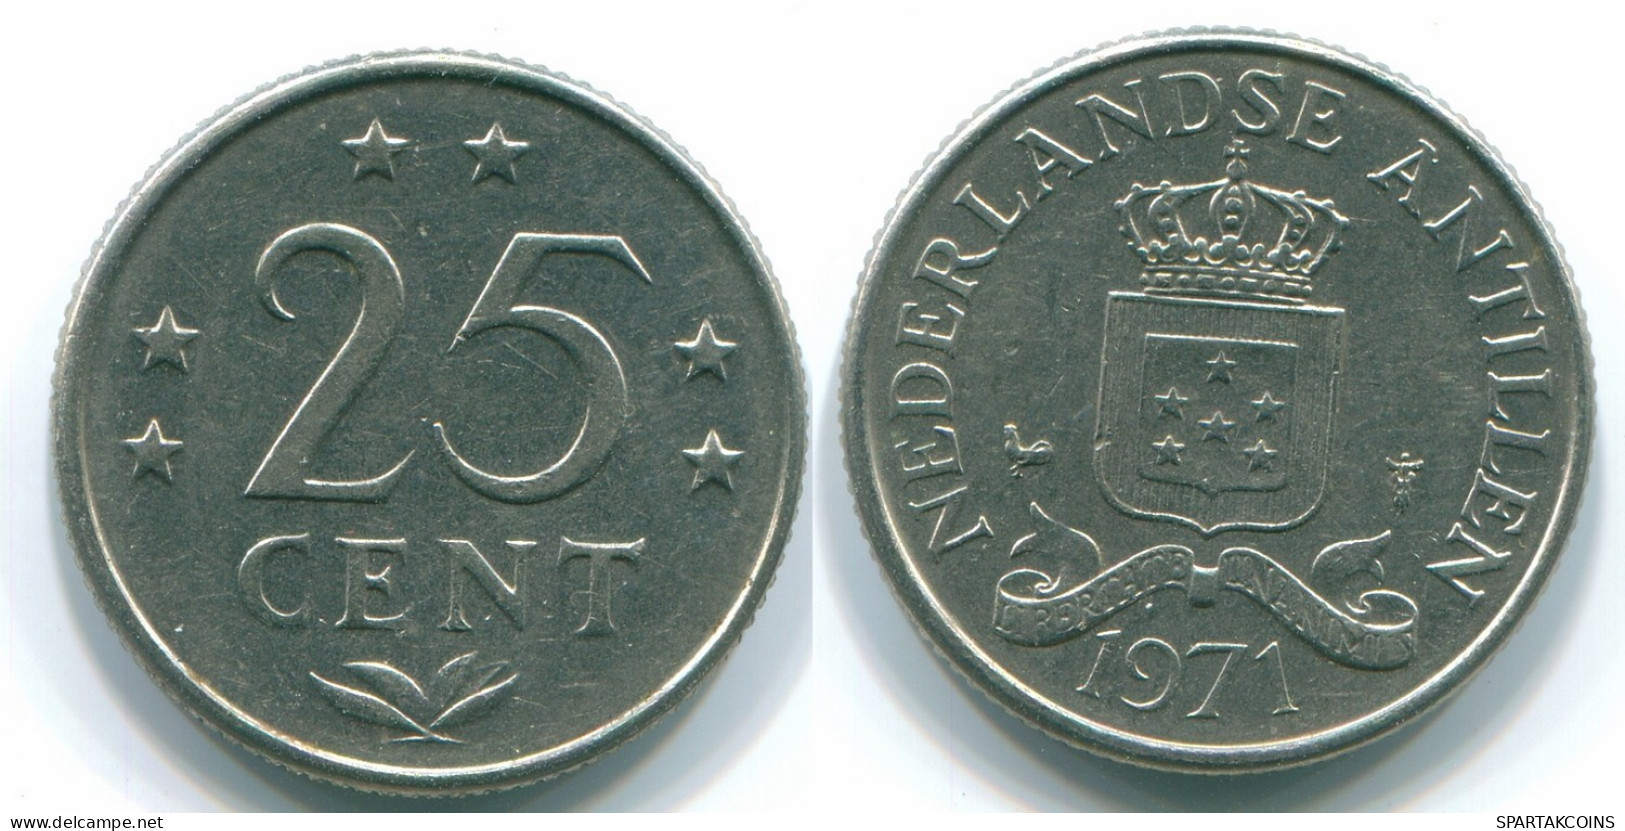 25 CENTS 1971 NIEDERLÄNDISCHE ANTILLEN Nickel Koloniale Münze #S11529.D.A - Netherlands Antilles